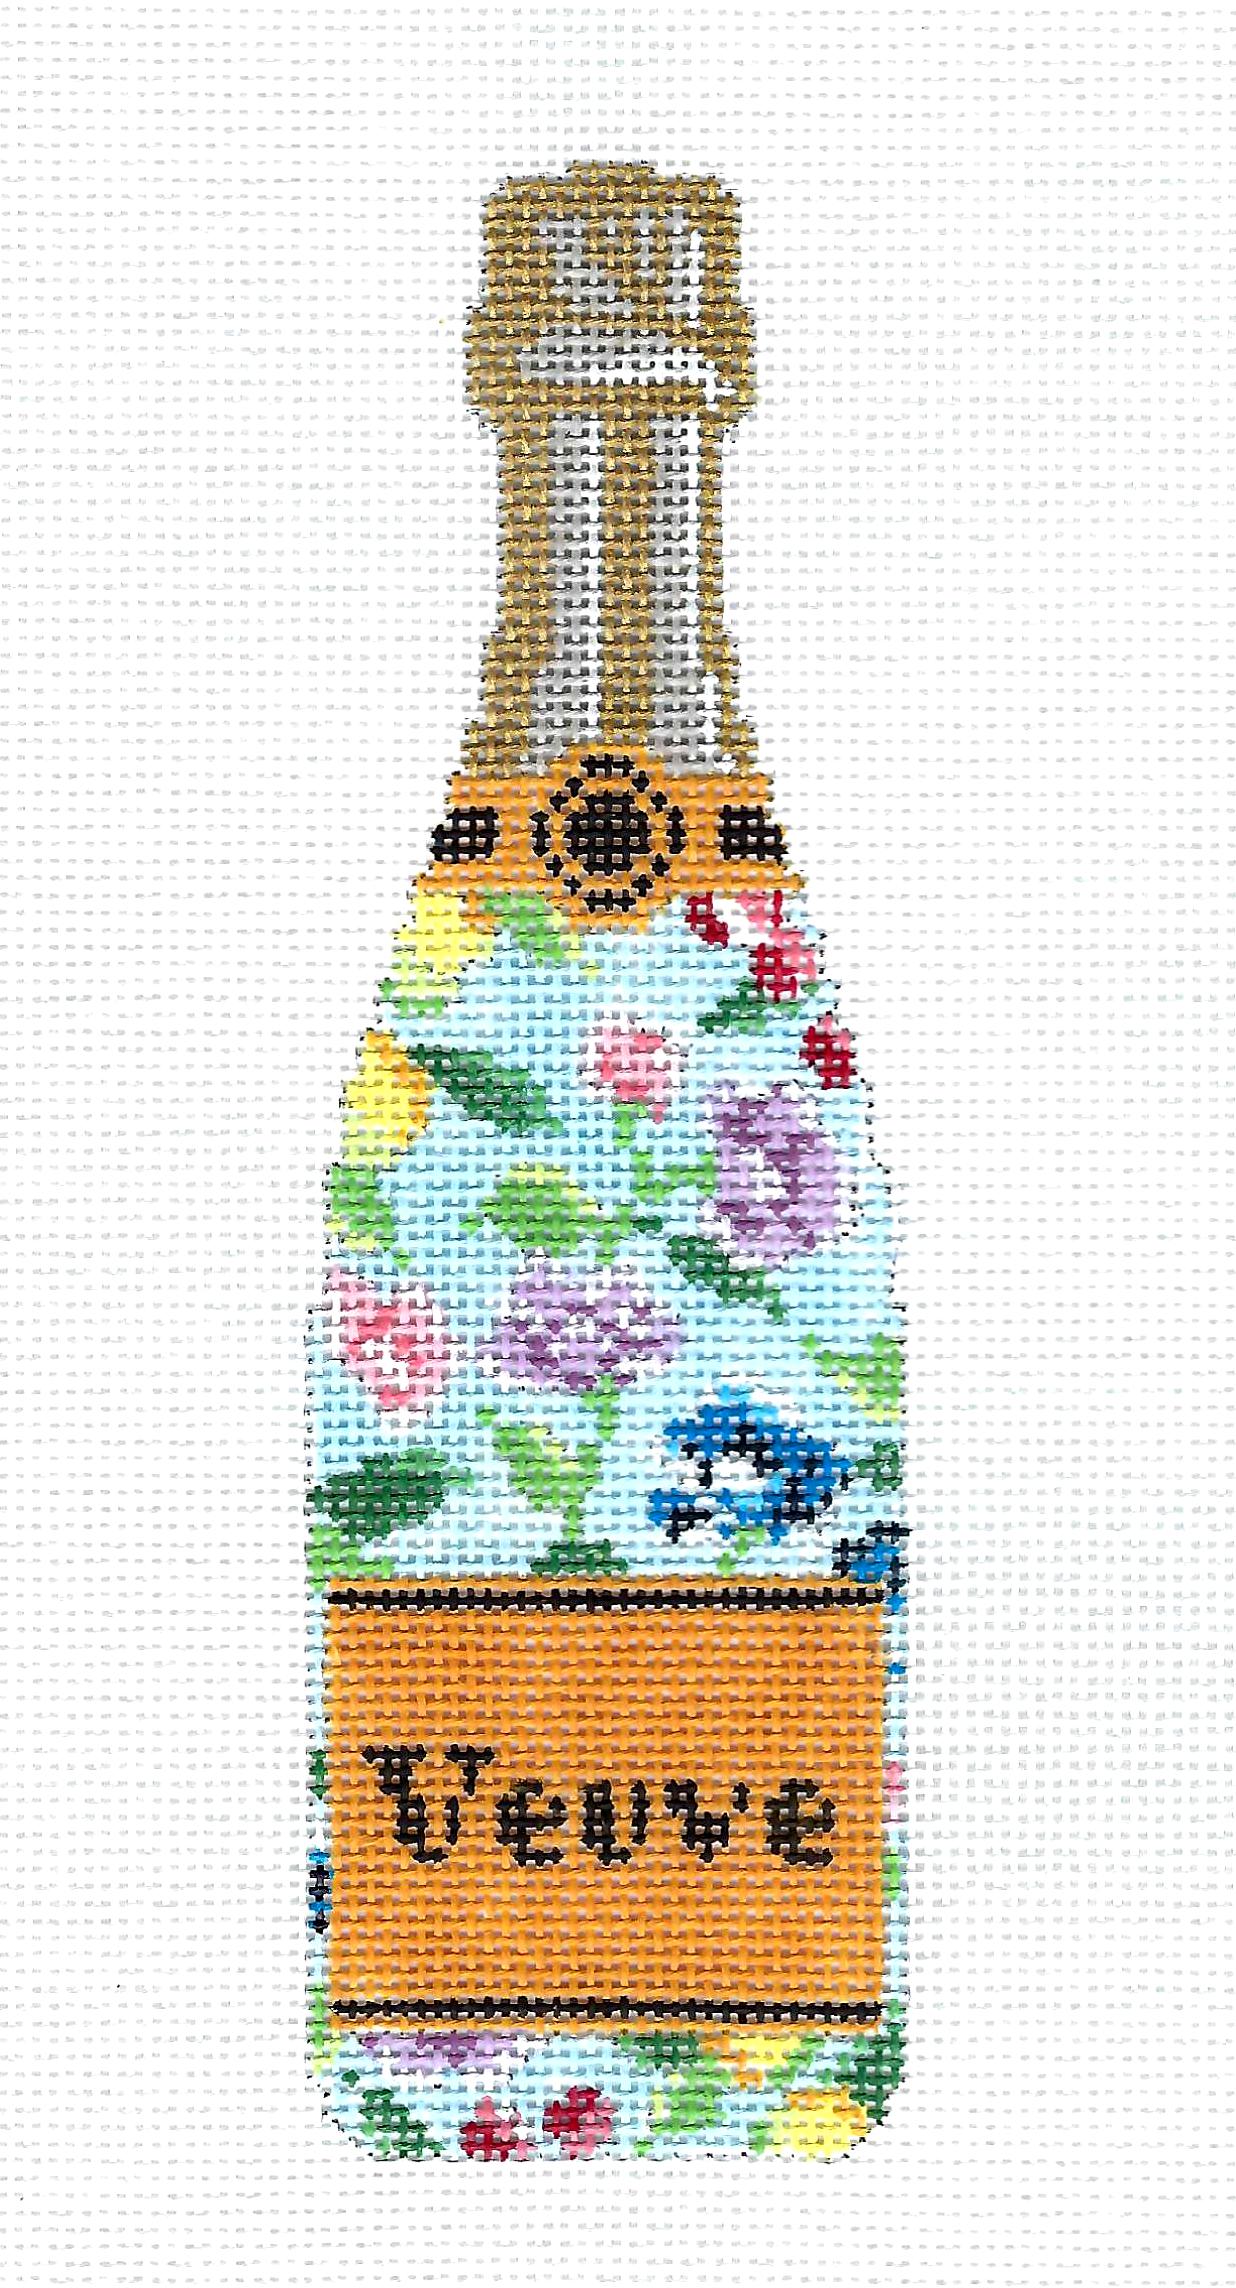 "Veuve" Champagne Bottle in Blue Floral Design handpainted 18mesh Needlepoint Canvas by C'ate La Vie